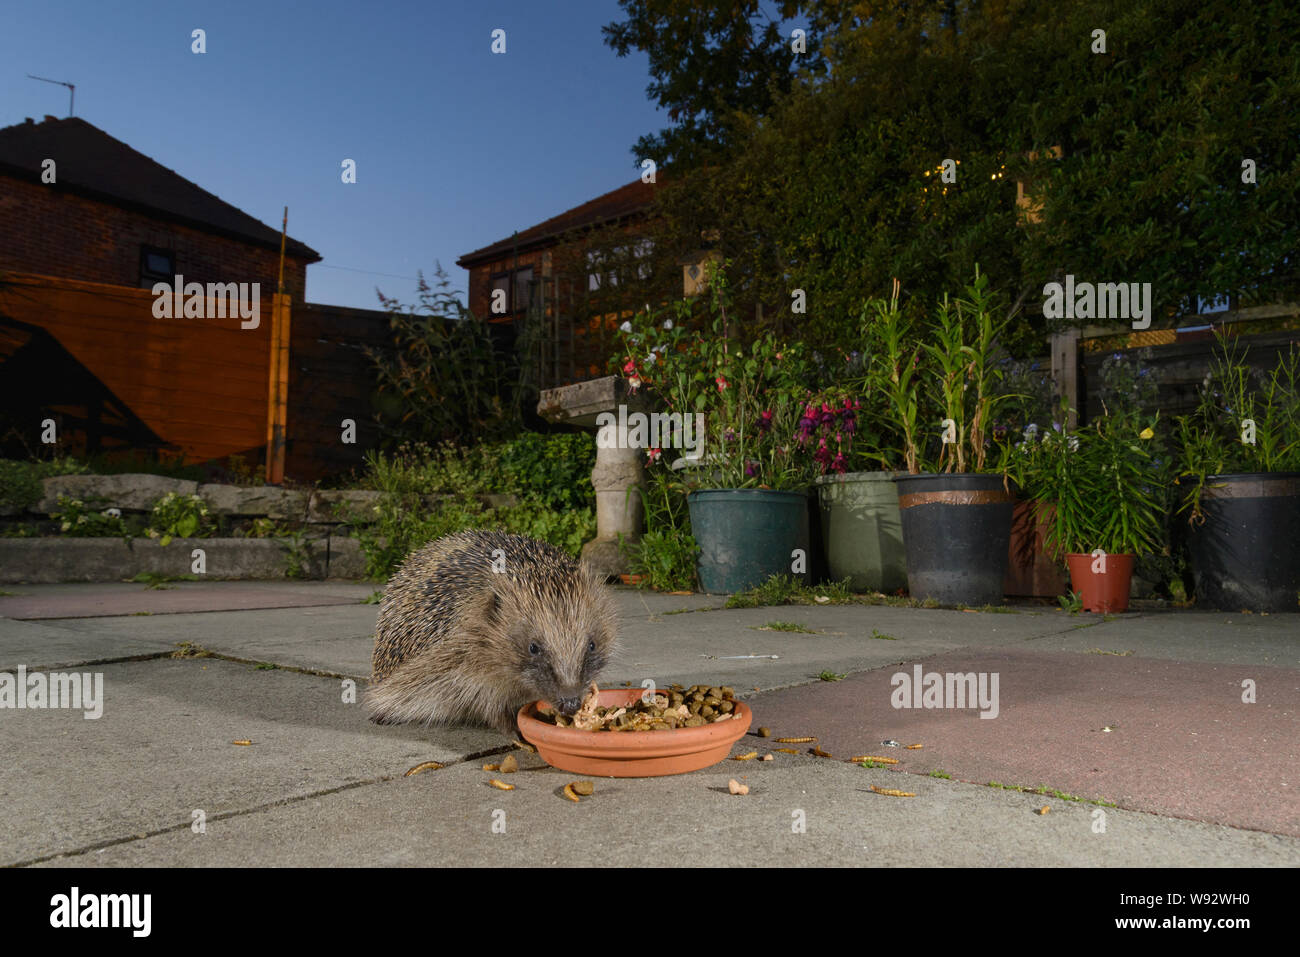 European hedgehog (Erinaceus europaeus),feeding from bowl in urban garden, Manchester, UK. July 2018 Stock Photo